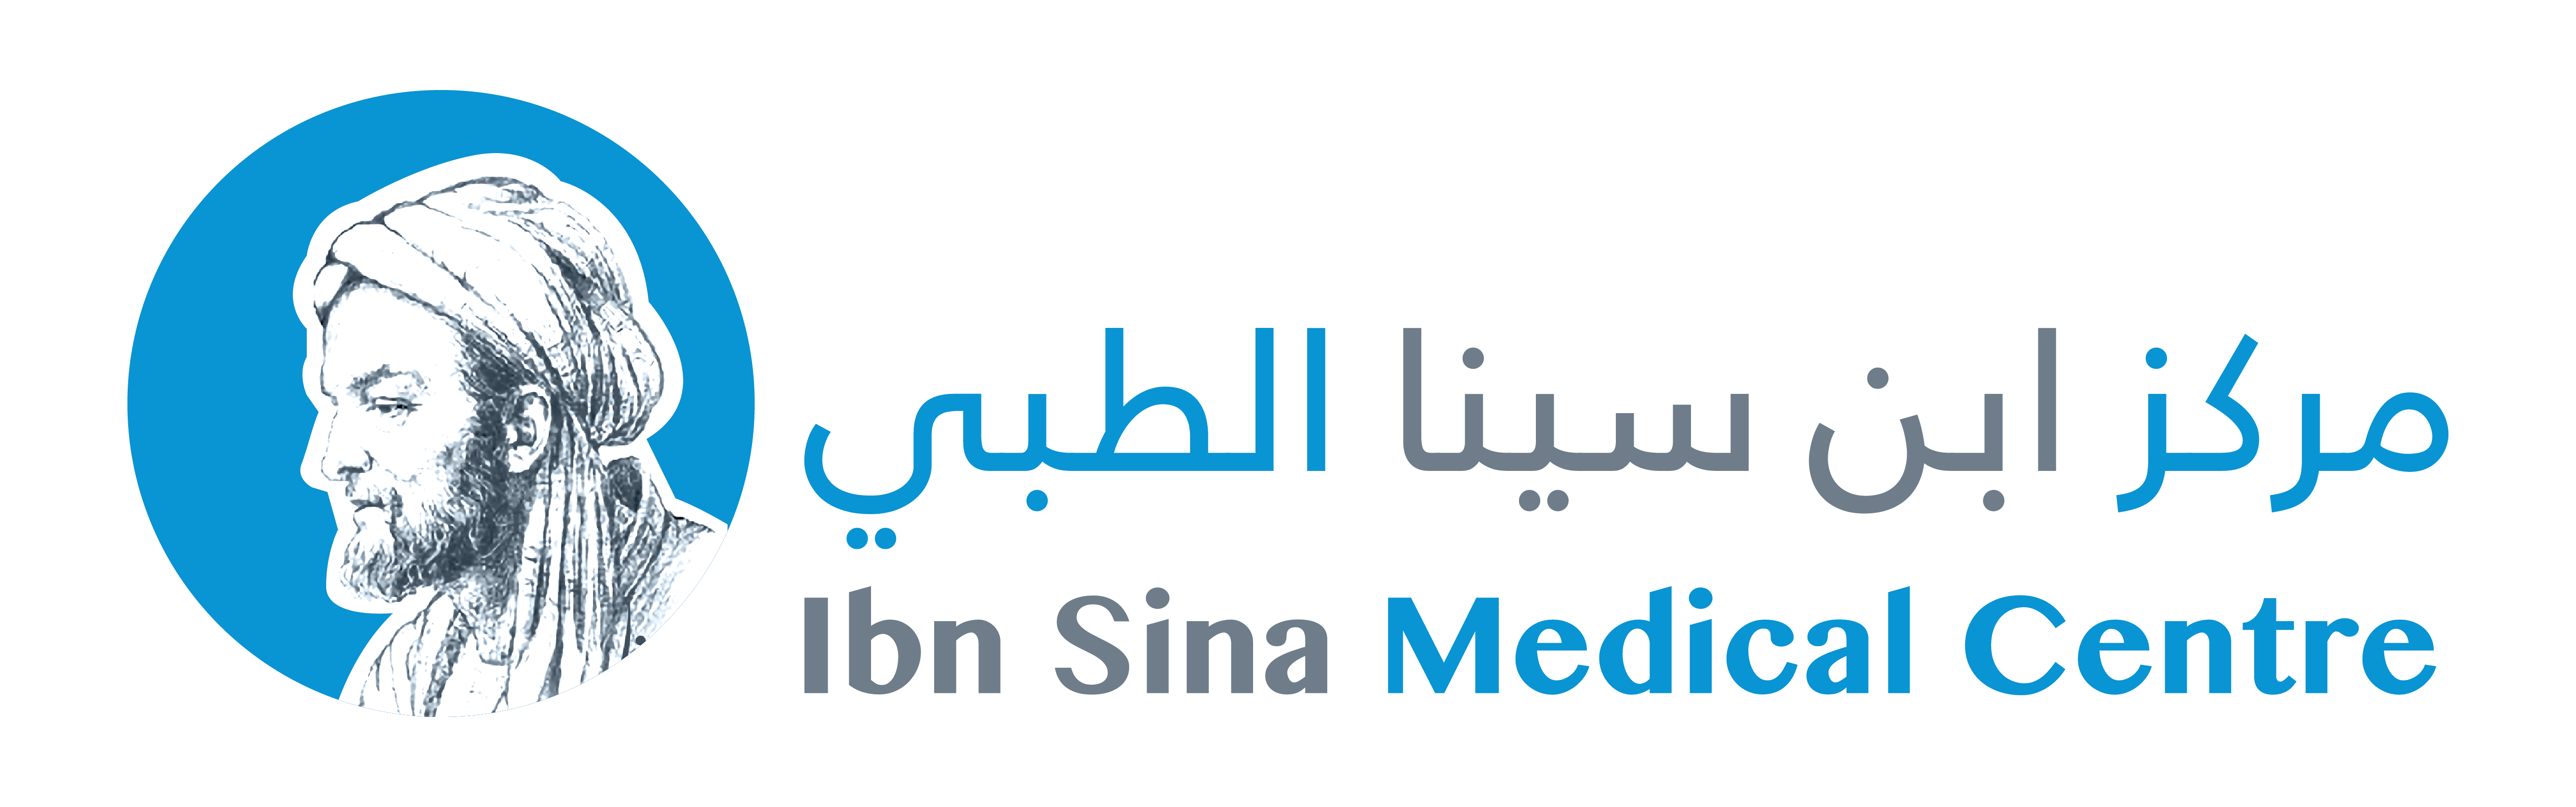 Ibn Sina Medical Centre